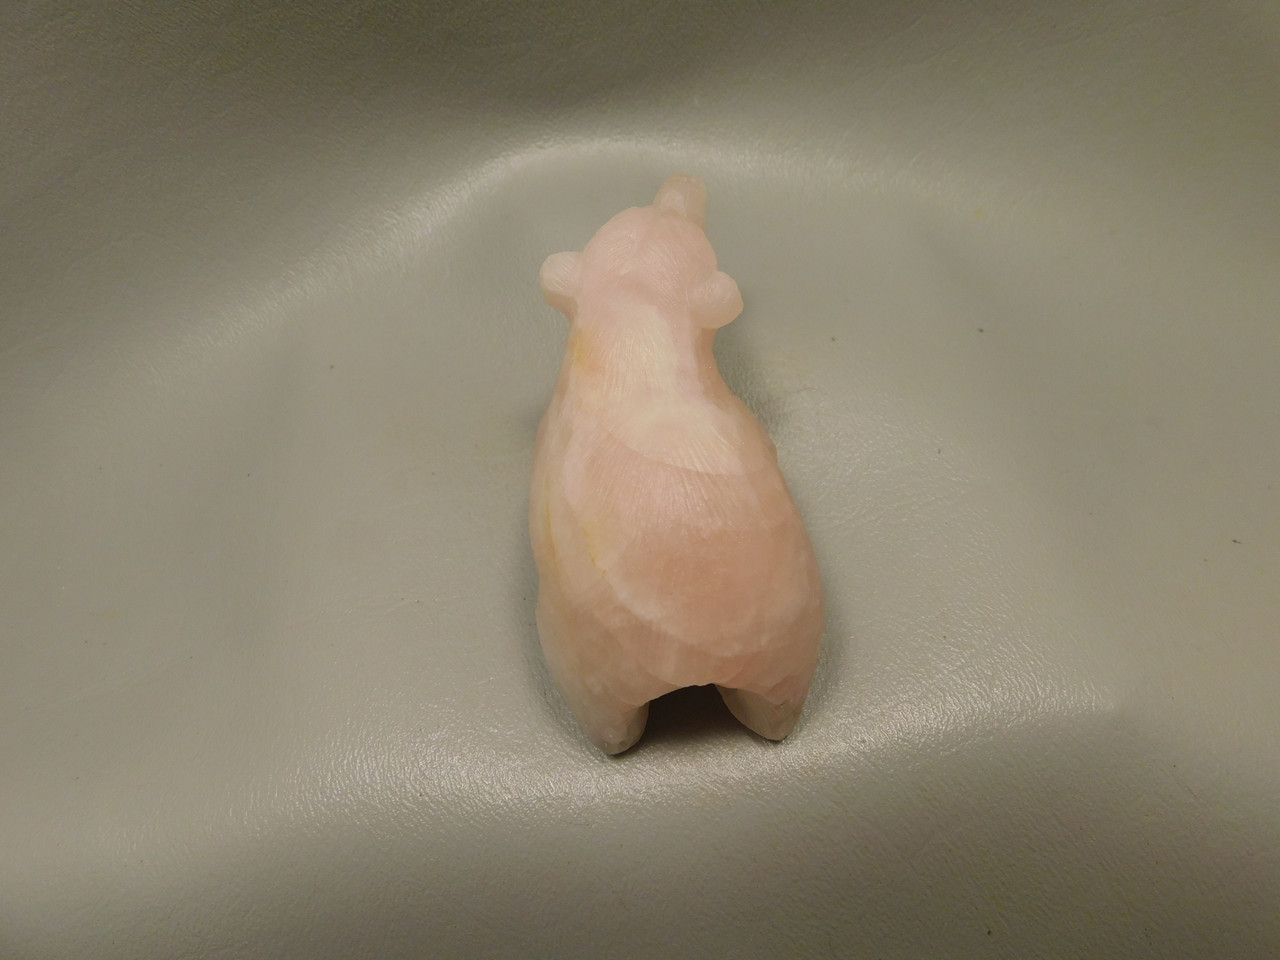 Bear Figurine Gemstone Animal Carving Rose Quartz 3 inch #O69